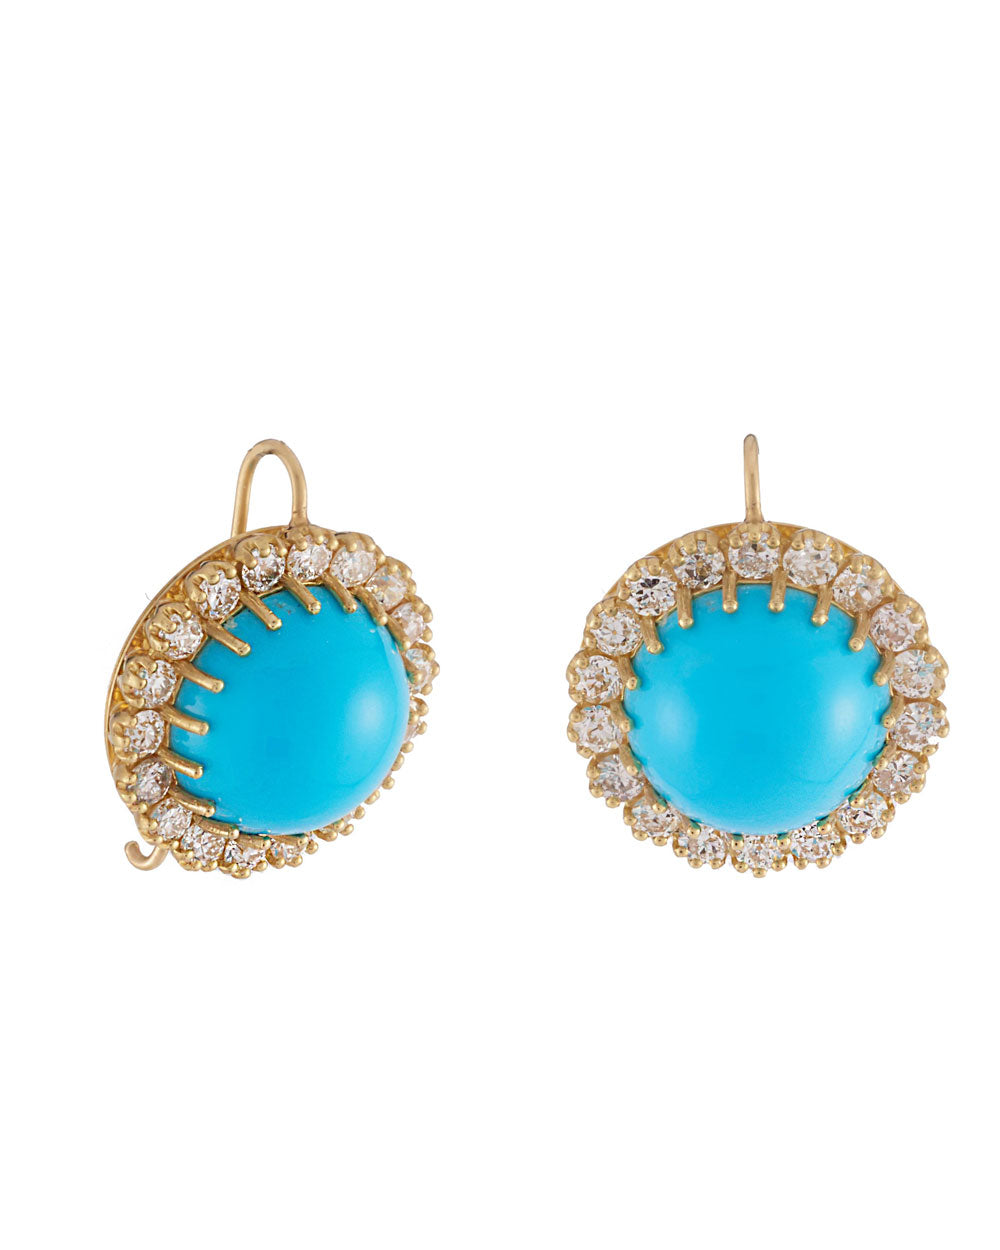 Sleeping Beauty Turquoise Button Earrings